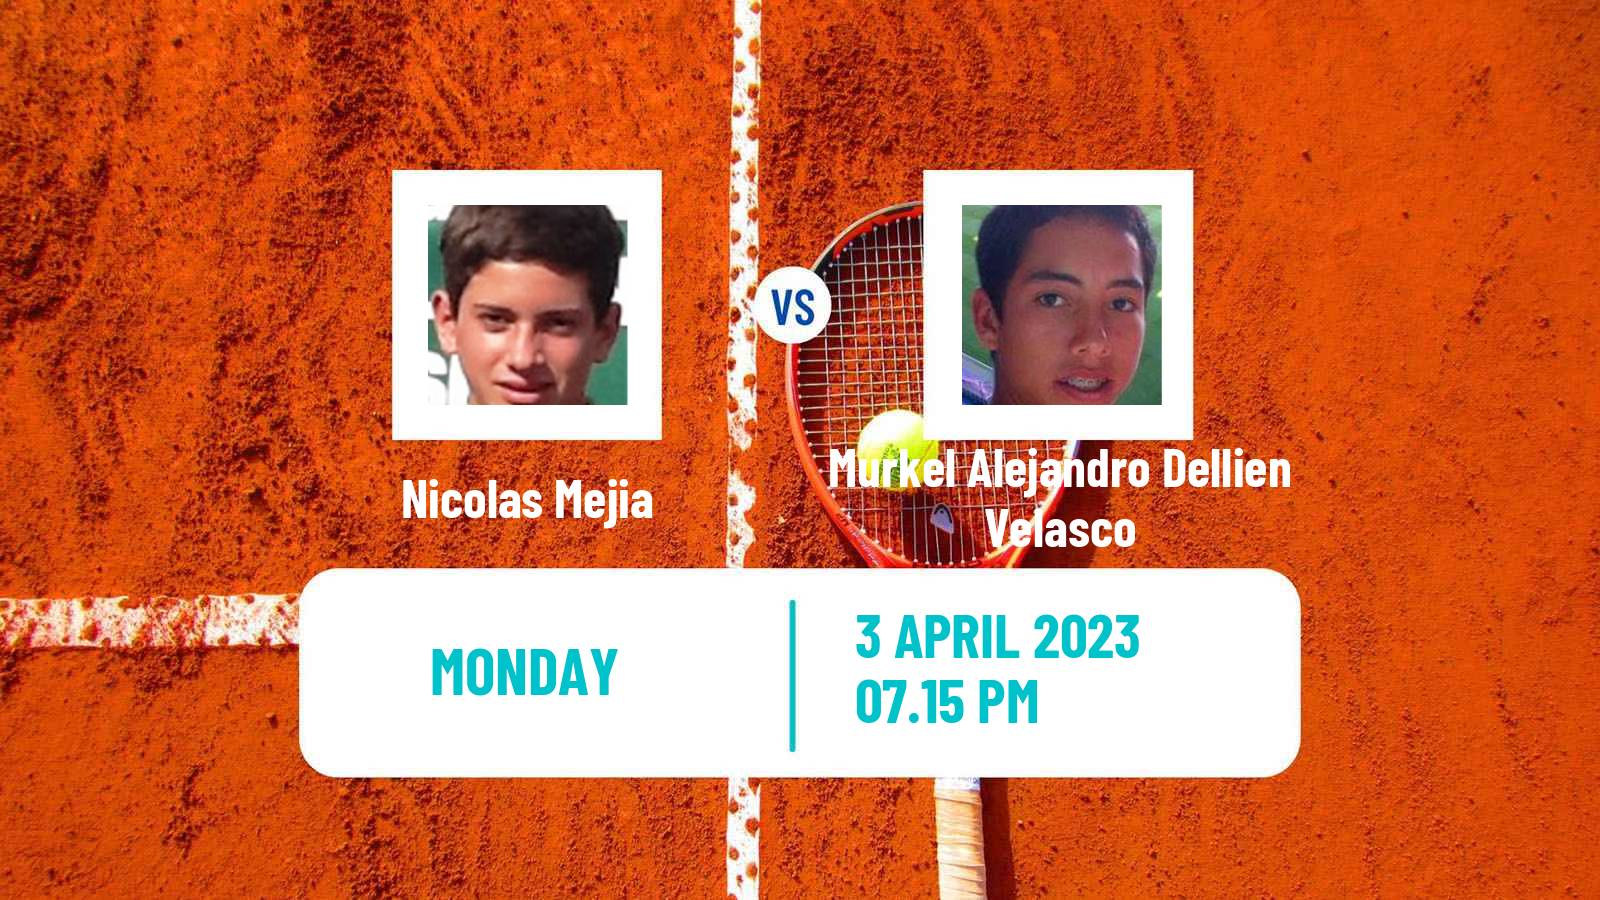 Tennis ATP Challenger Nicolas Mejia - Murkel Alejandro Dellien Velasco